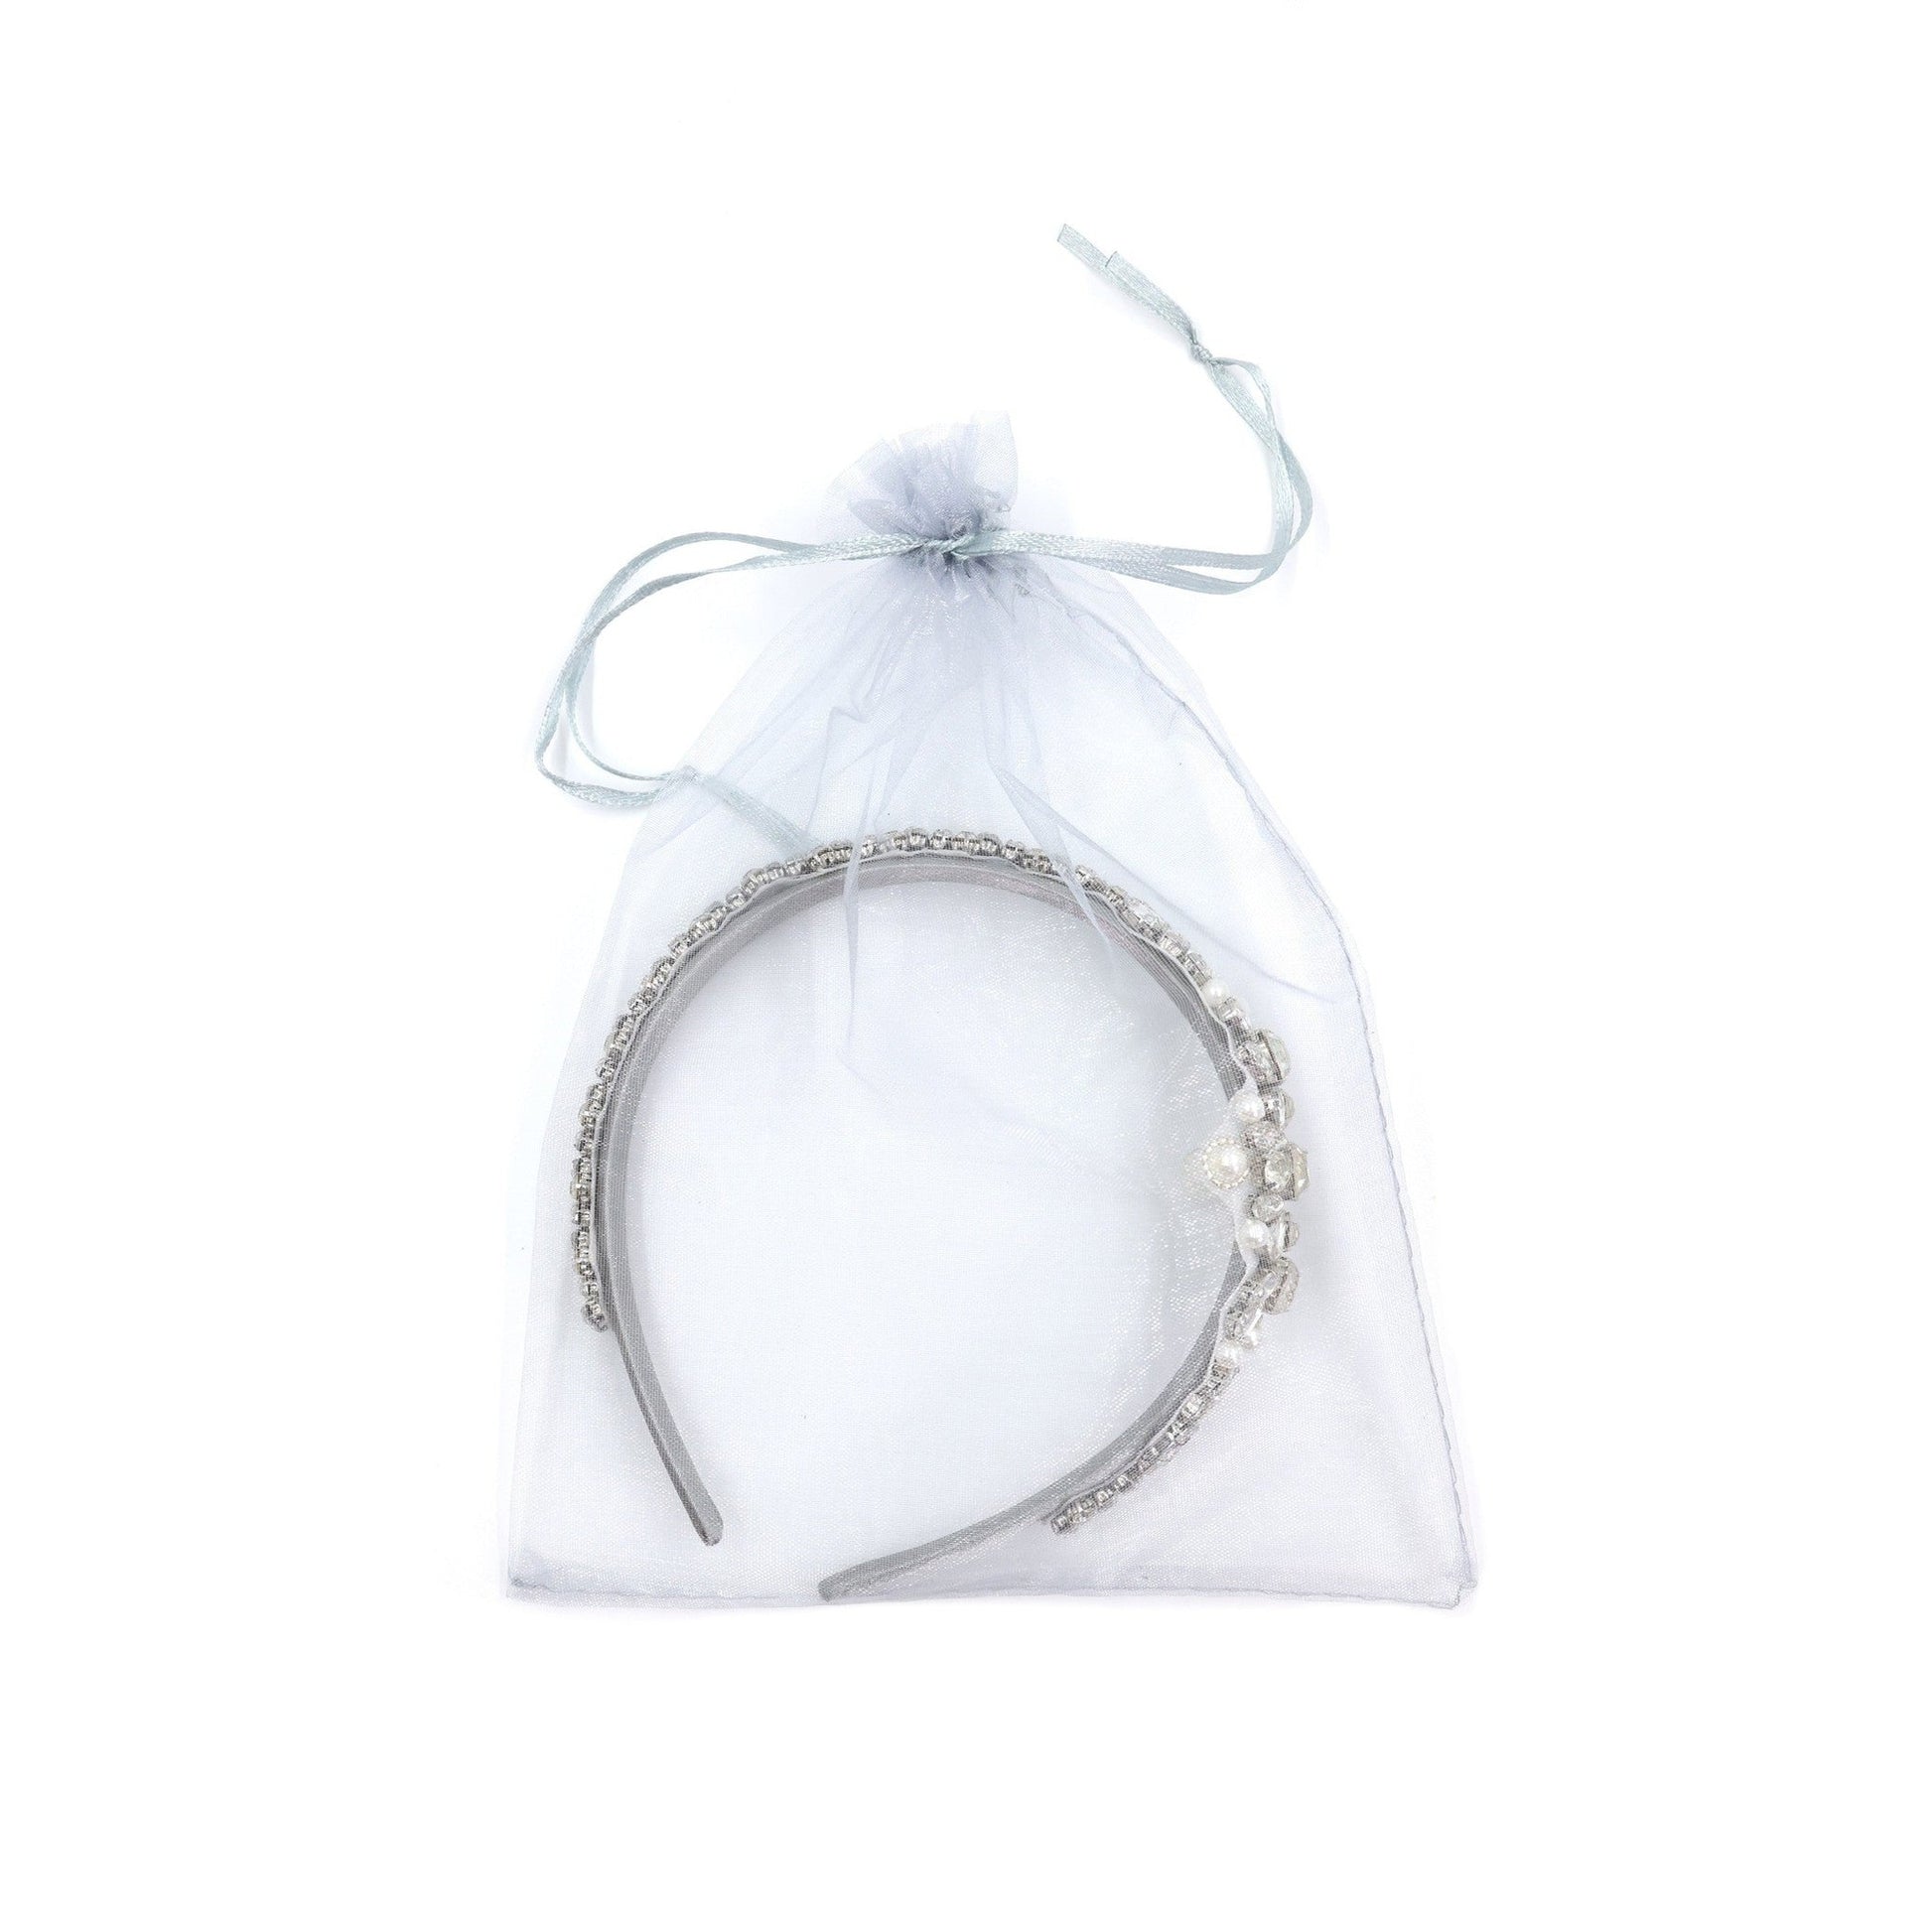 Vintage Bride Bejeweled Asymmetrical Headband Tiara | Royalty Crown Party or Bridal Hair Accessory